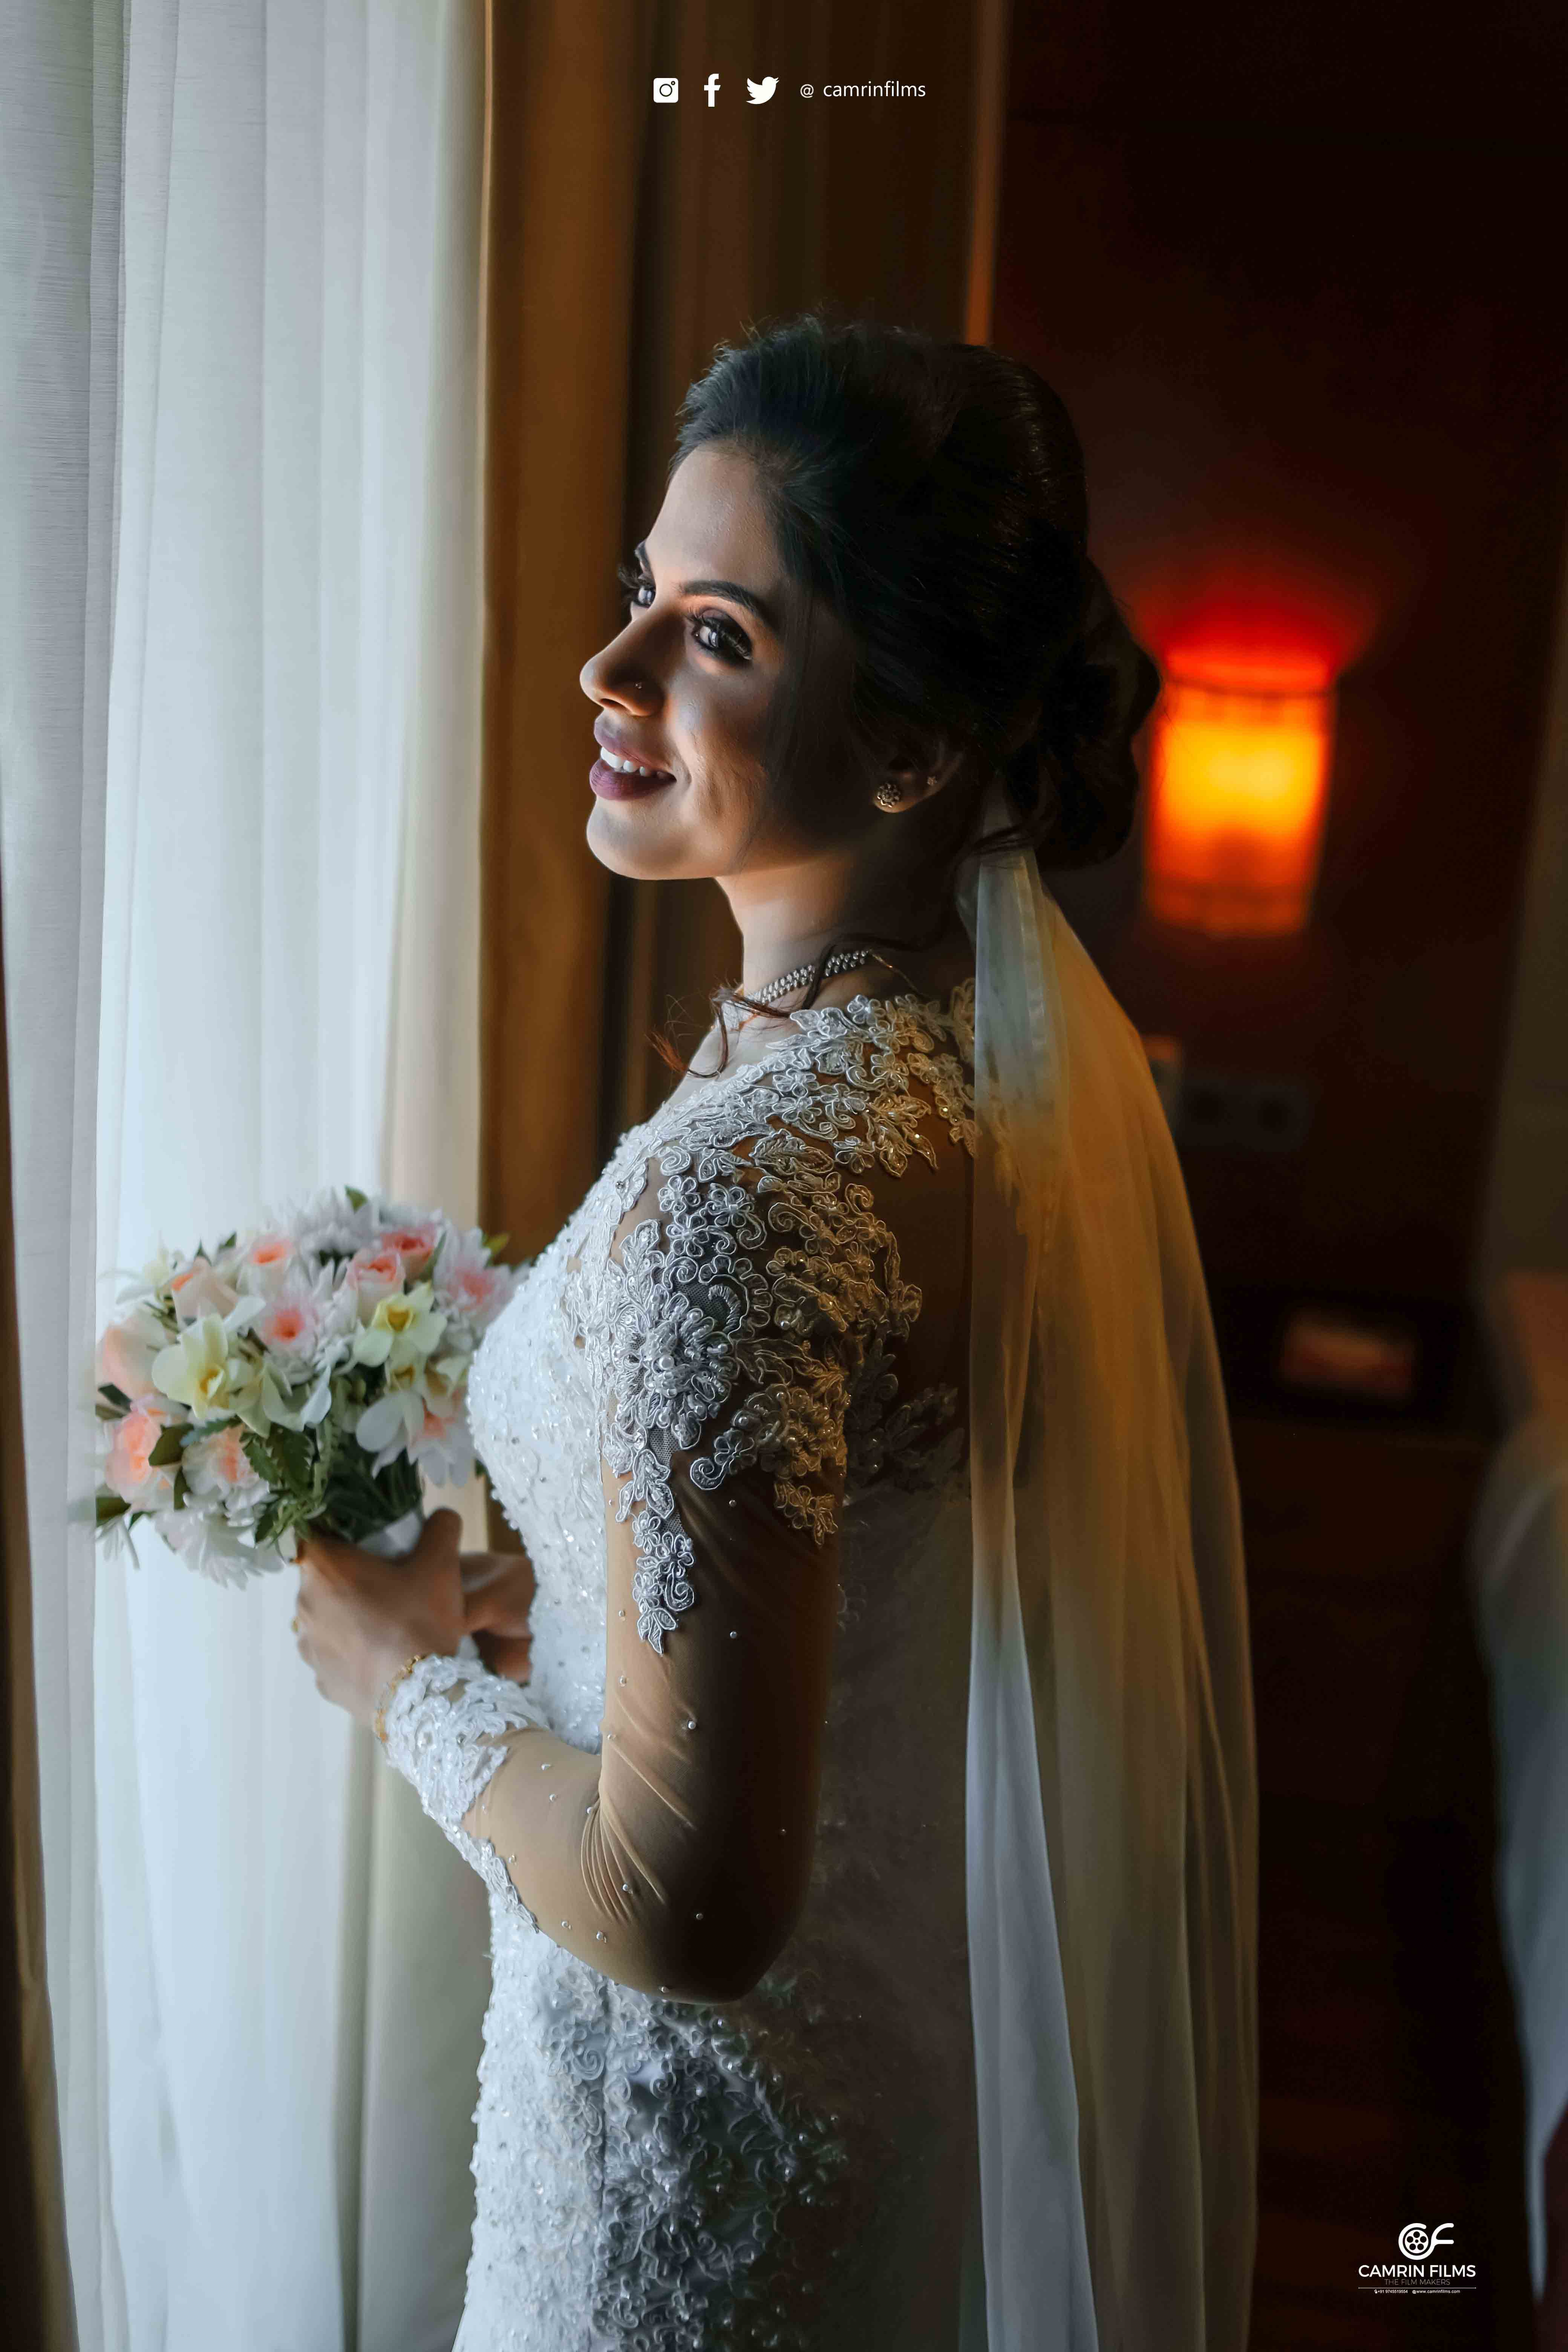 Best Bridal Boutique in Bangalore  Wedding Gowns  Menorah Bridal